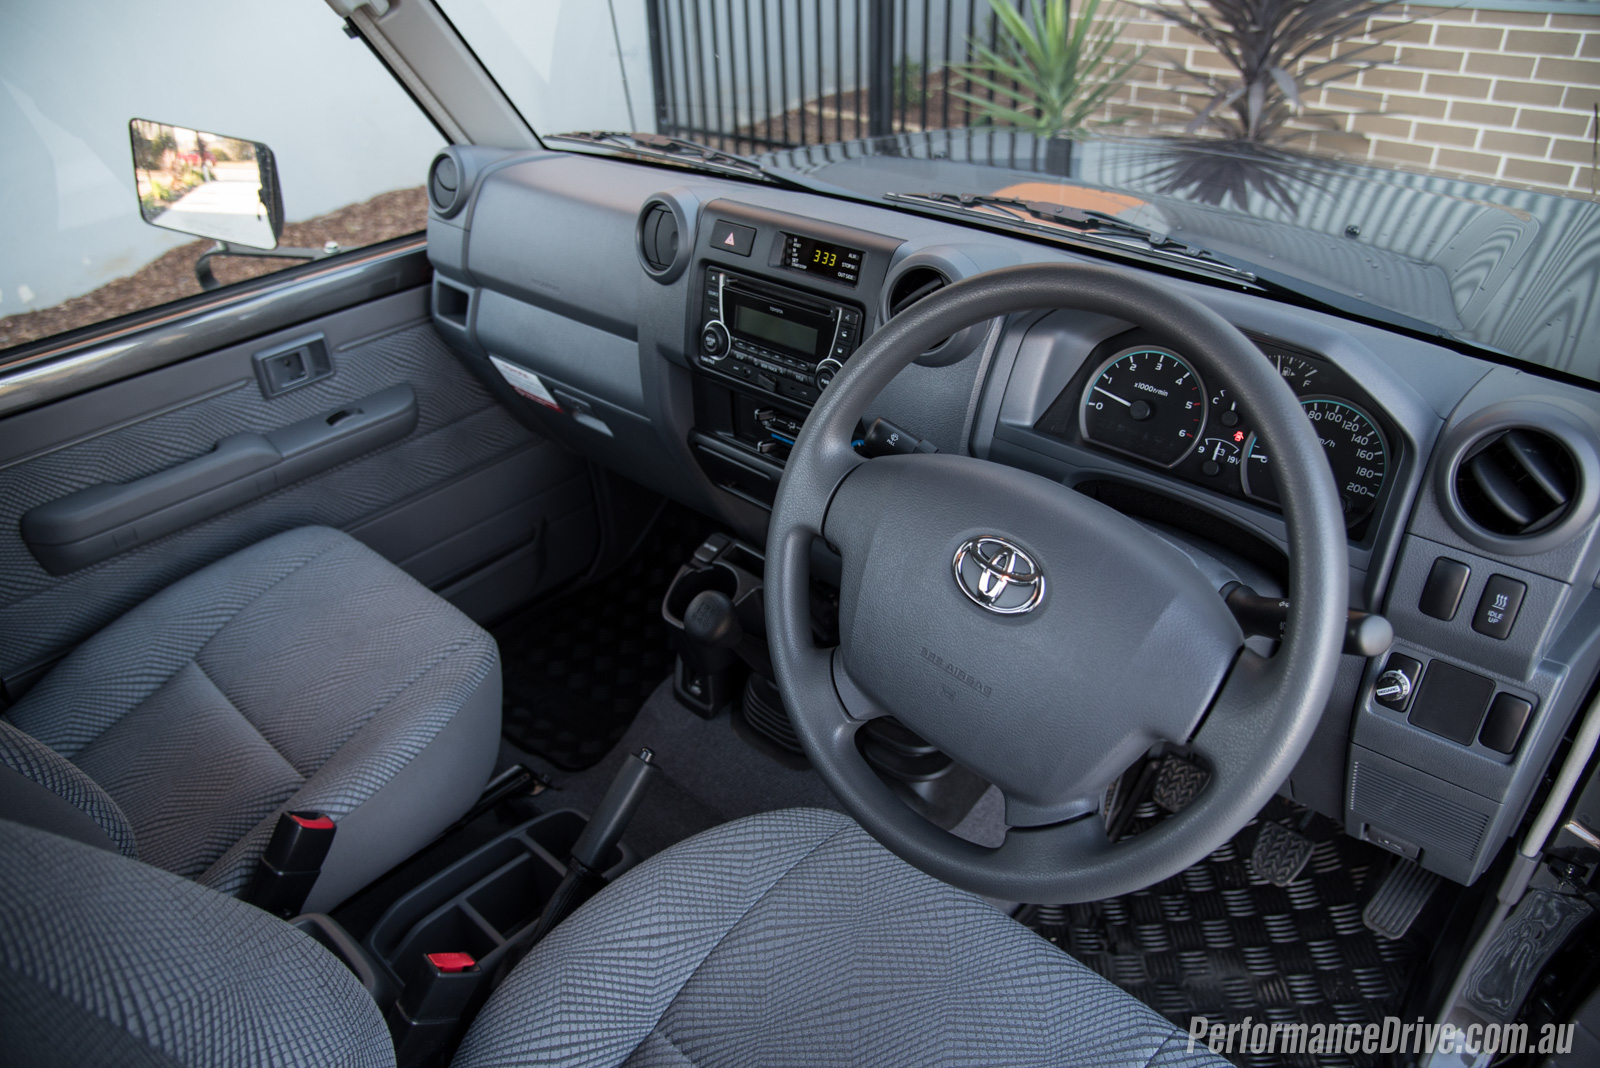 2016 Toyota Landcruiser 70 Ute Review Video Performancedrive